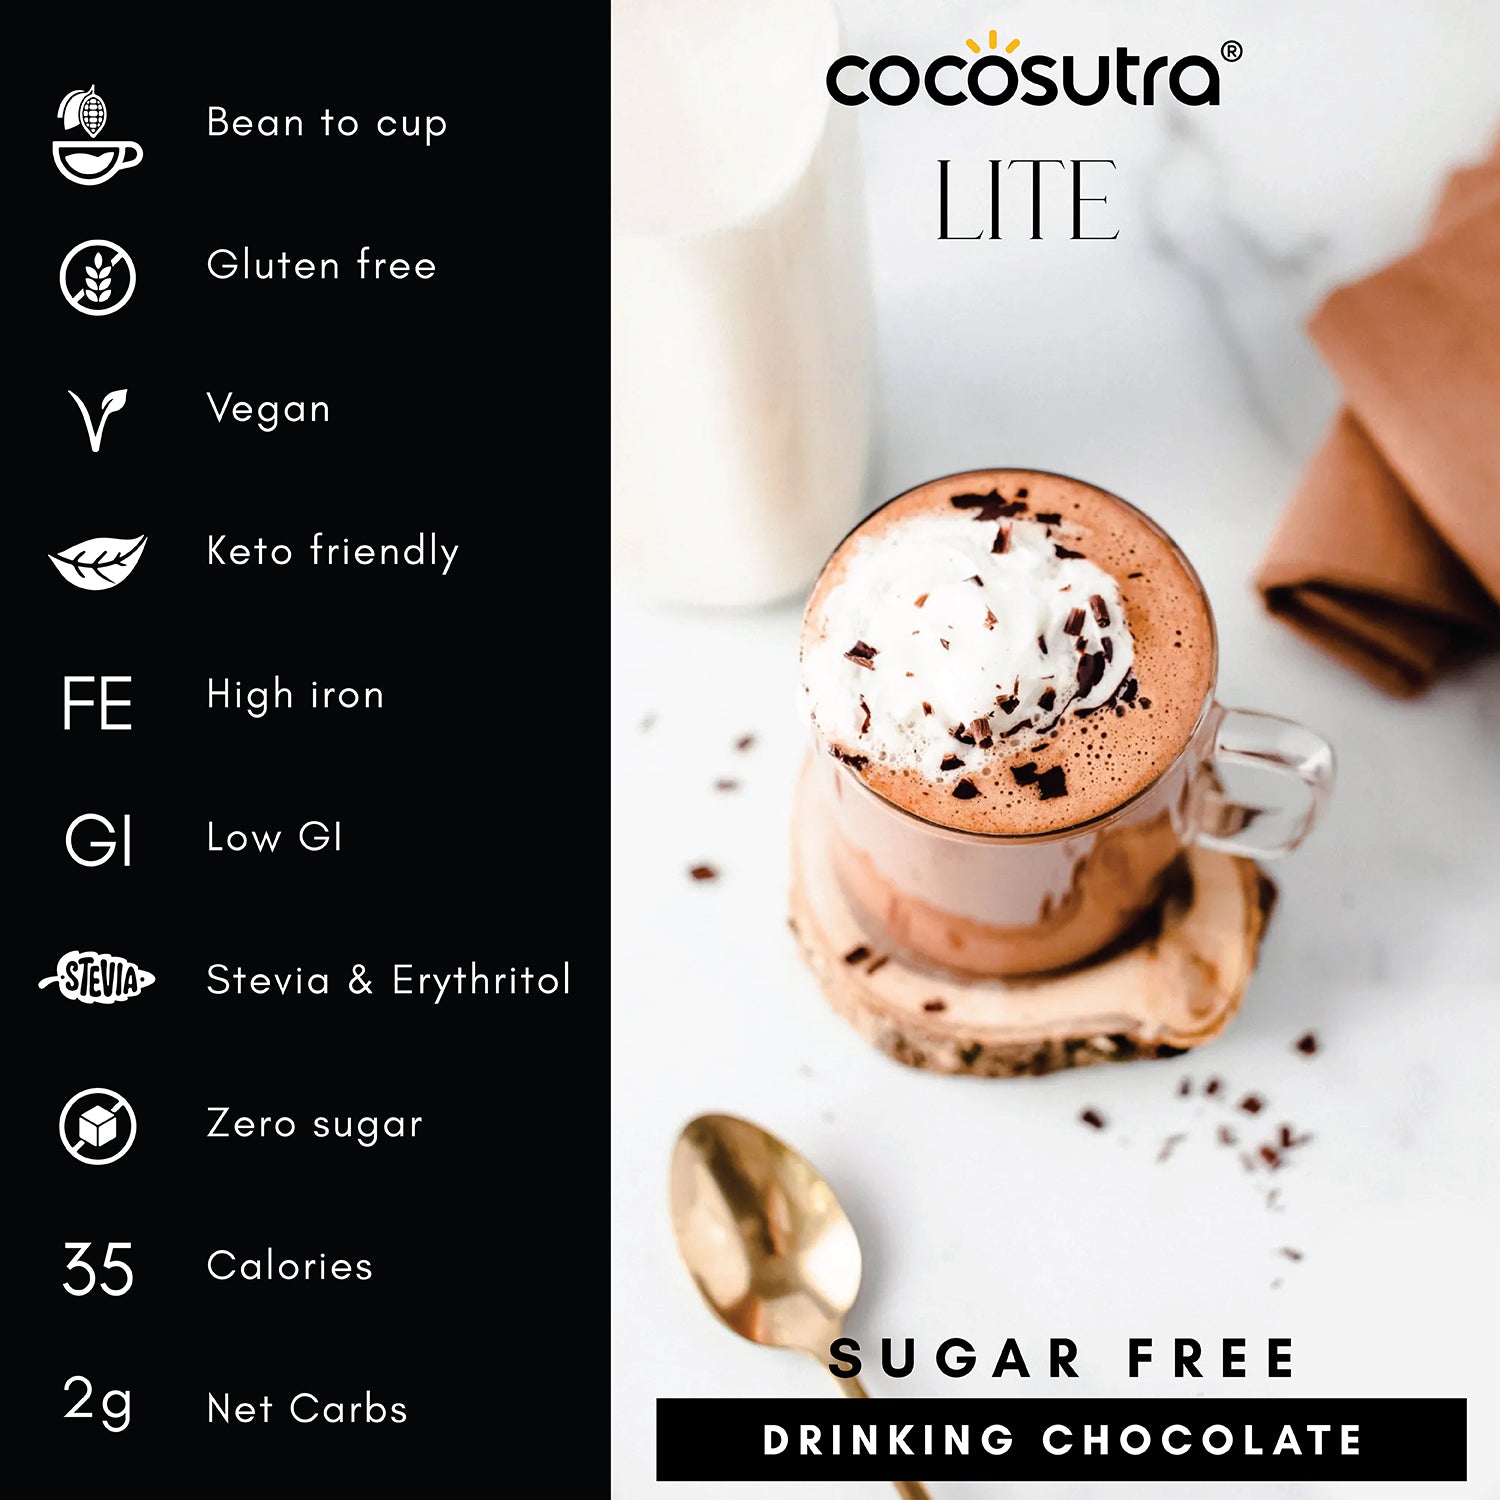 Cocosutra LITE Sugar Free Drinking Chocolate Hamper - Benefits